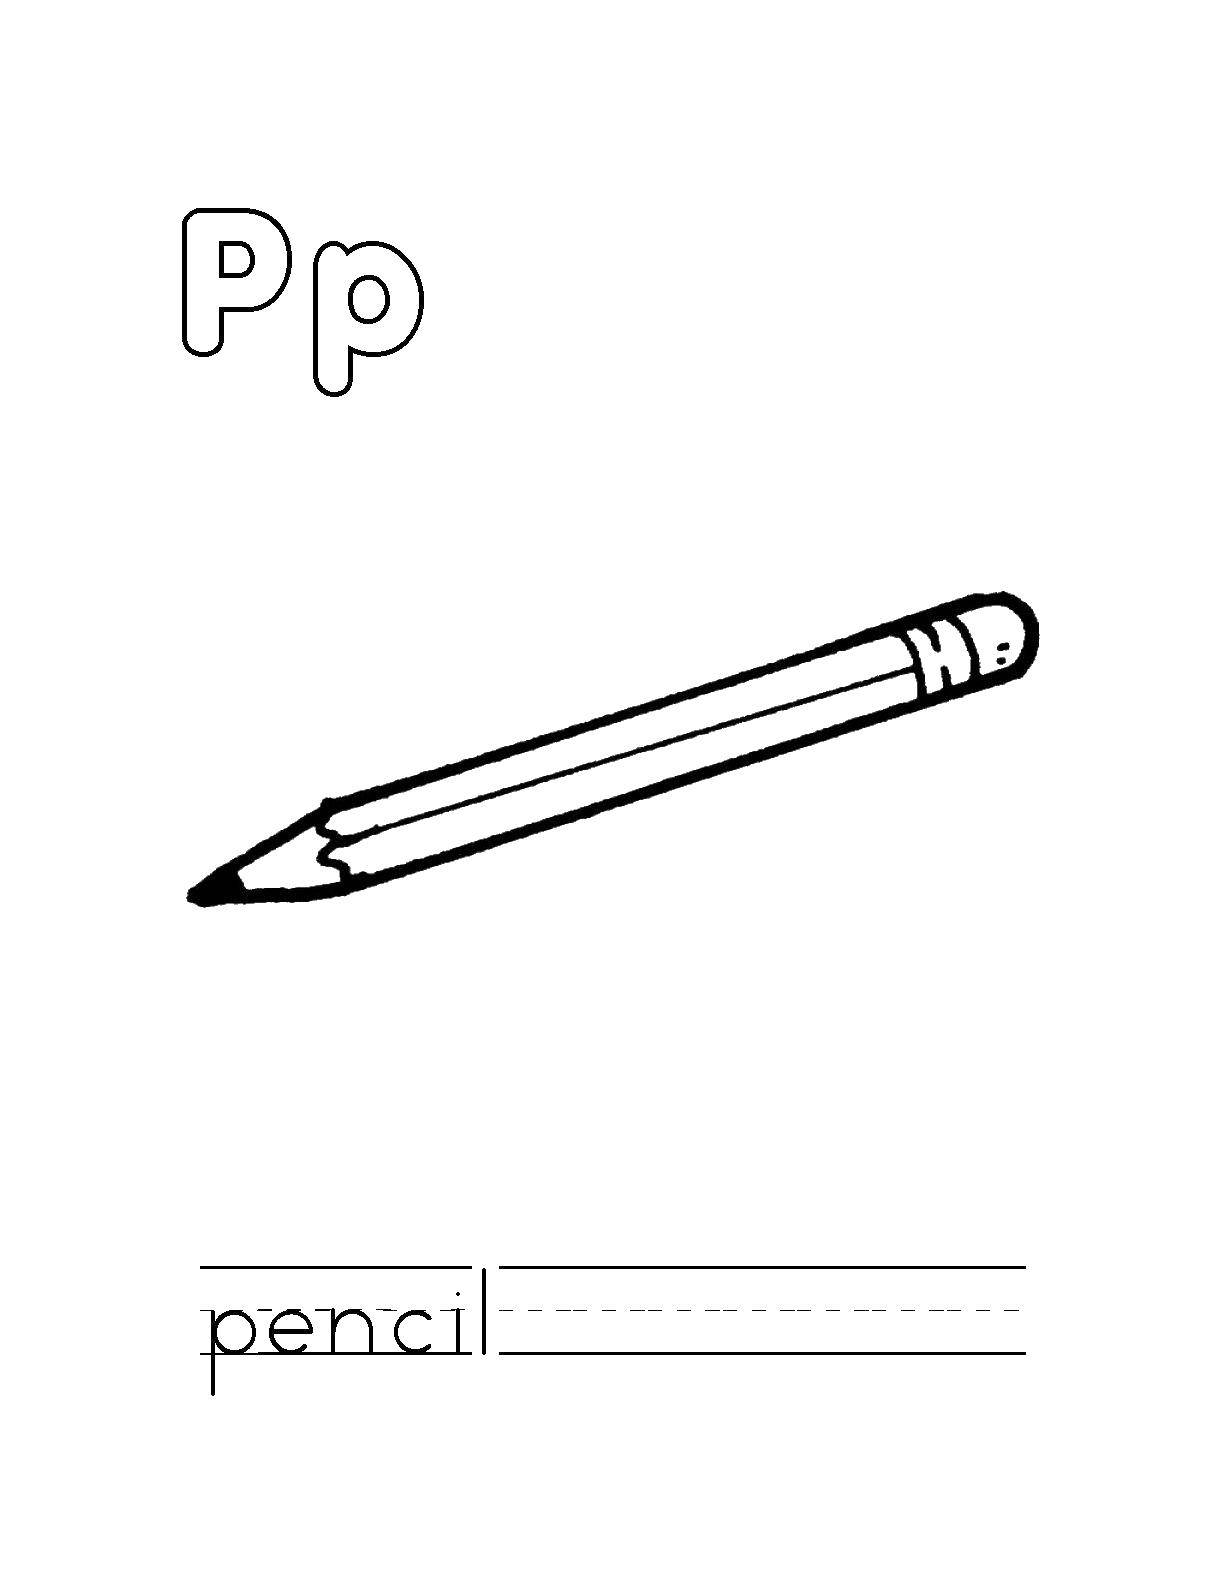 Pen по английски. Ручка раскраска для детей. Английские прописи раскраски. Раскраска с карандашами. Pen раскраска.